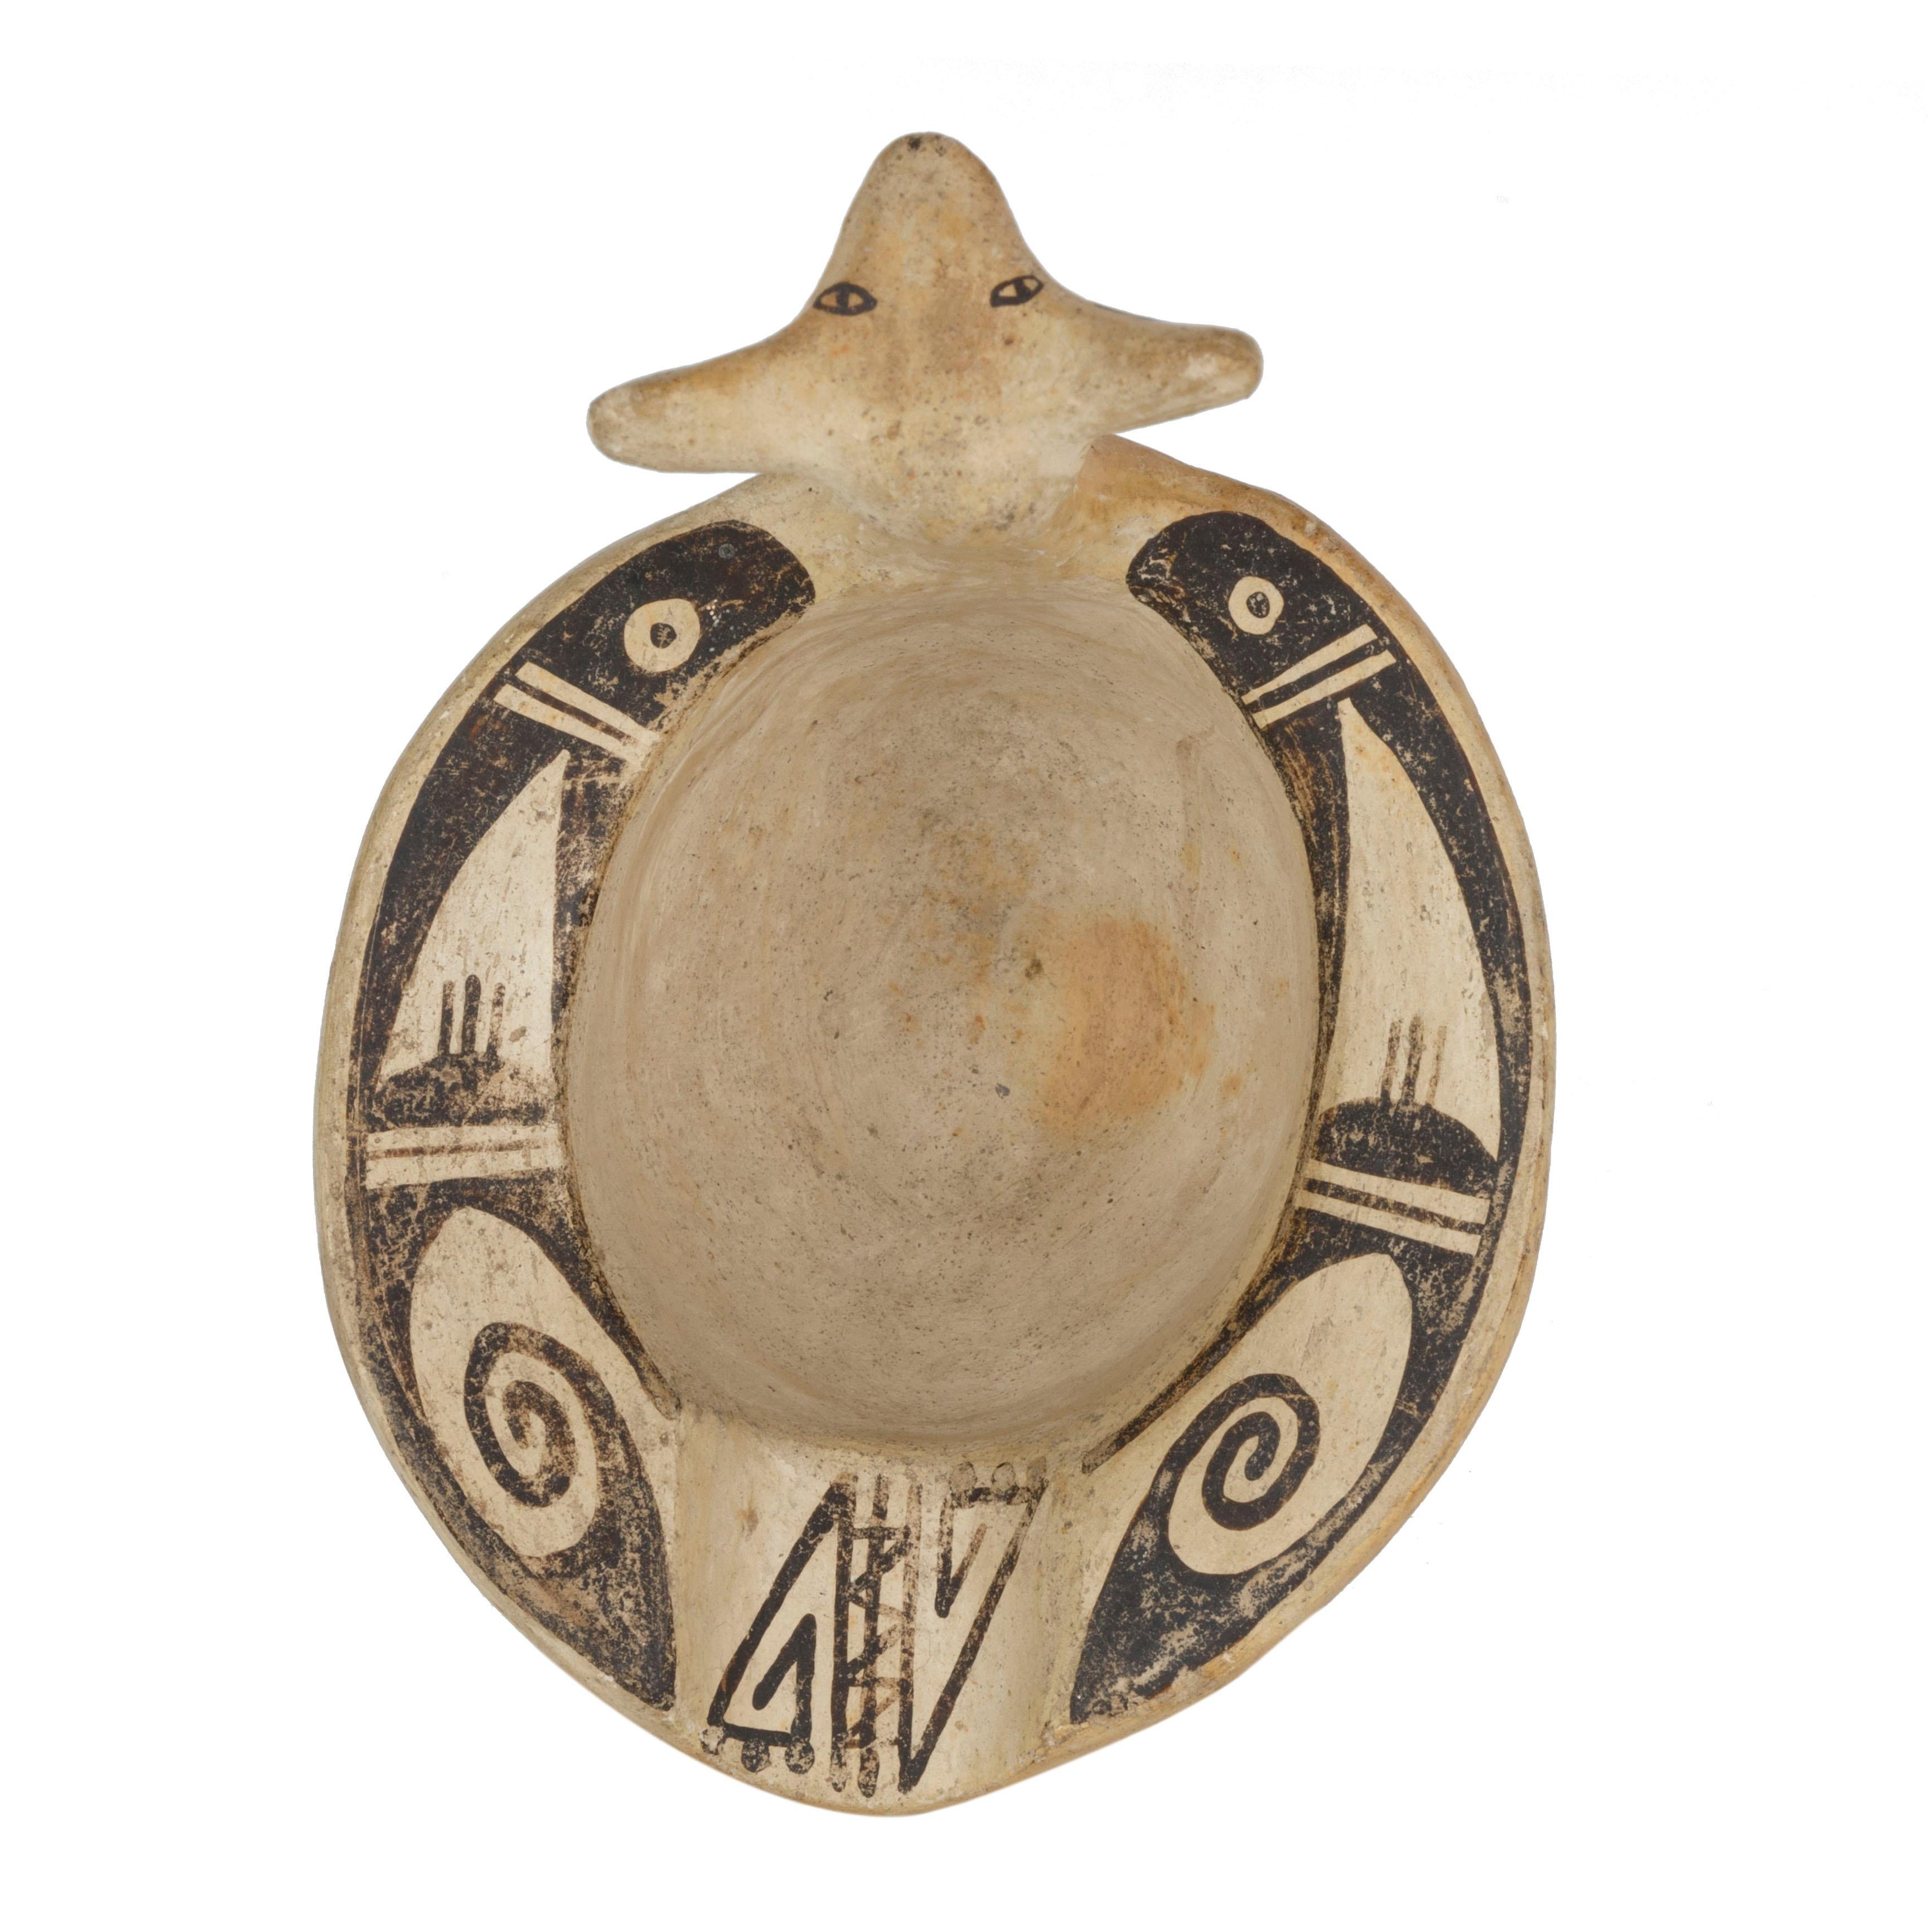 Hopi sheep effigy jar. Possibly an ash tray.

Period: Last half of the 20th century
Origin: Southwest
Size: 4